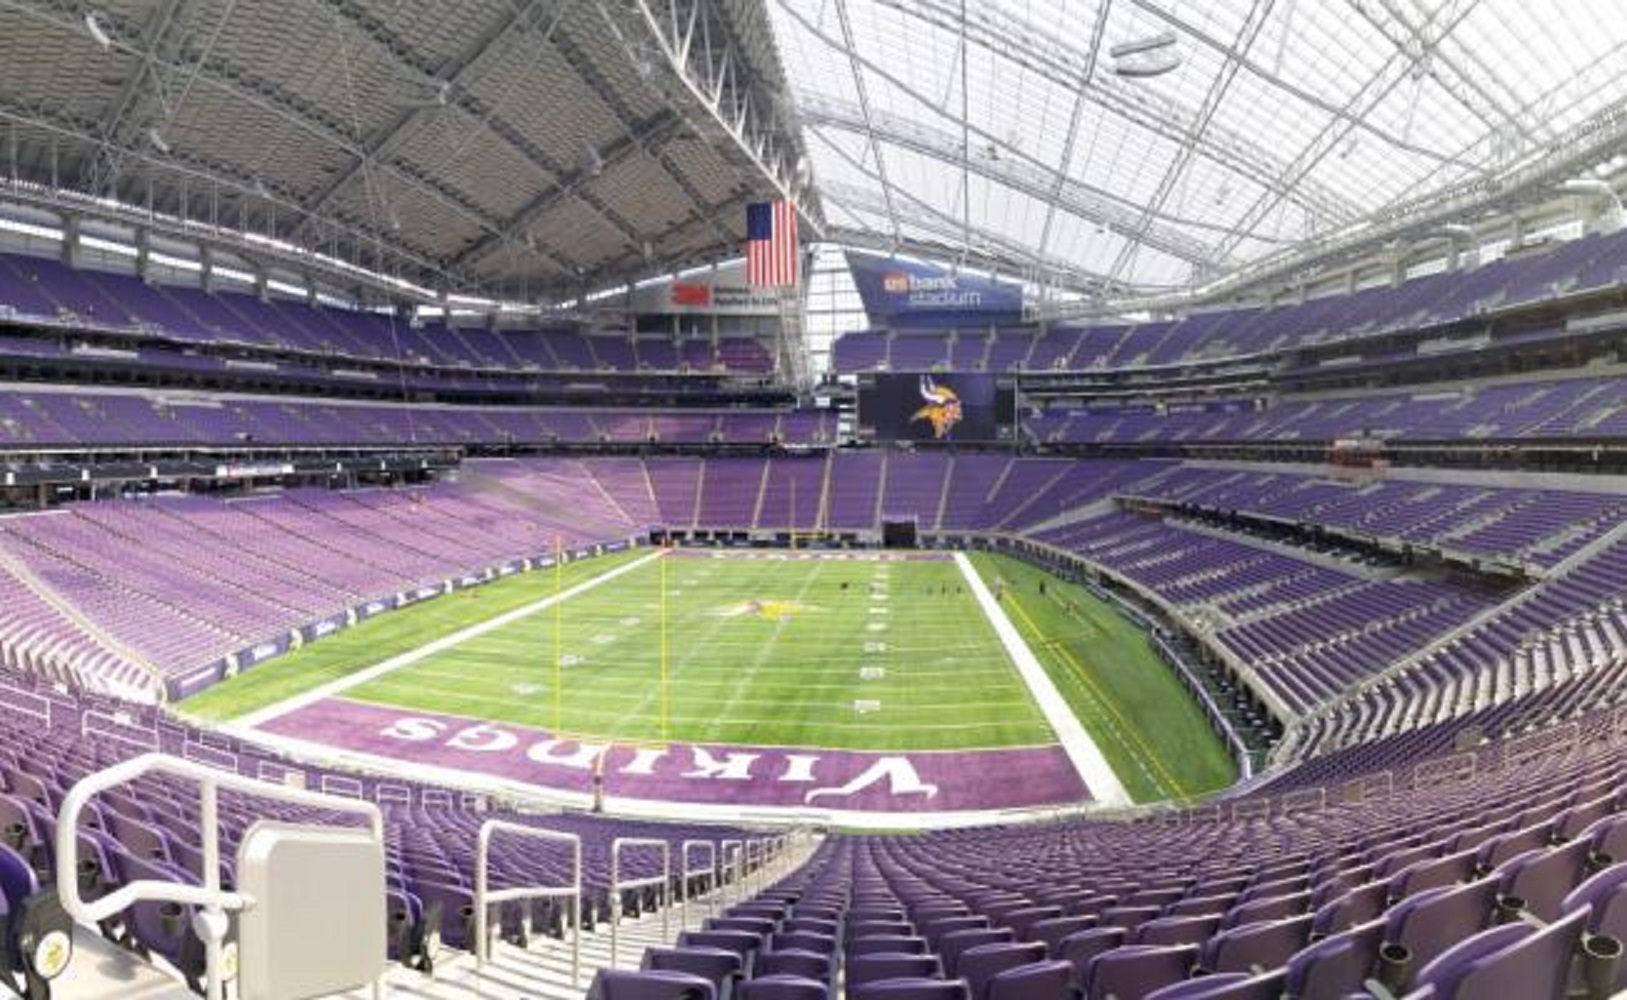 Vikings, Final, Conferencia Nacional, Super Bowl, NFL, US Bank Stadium